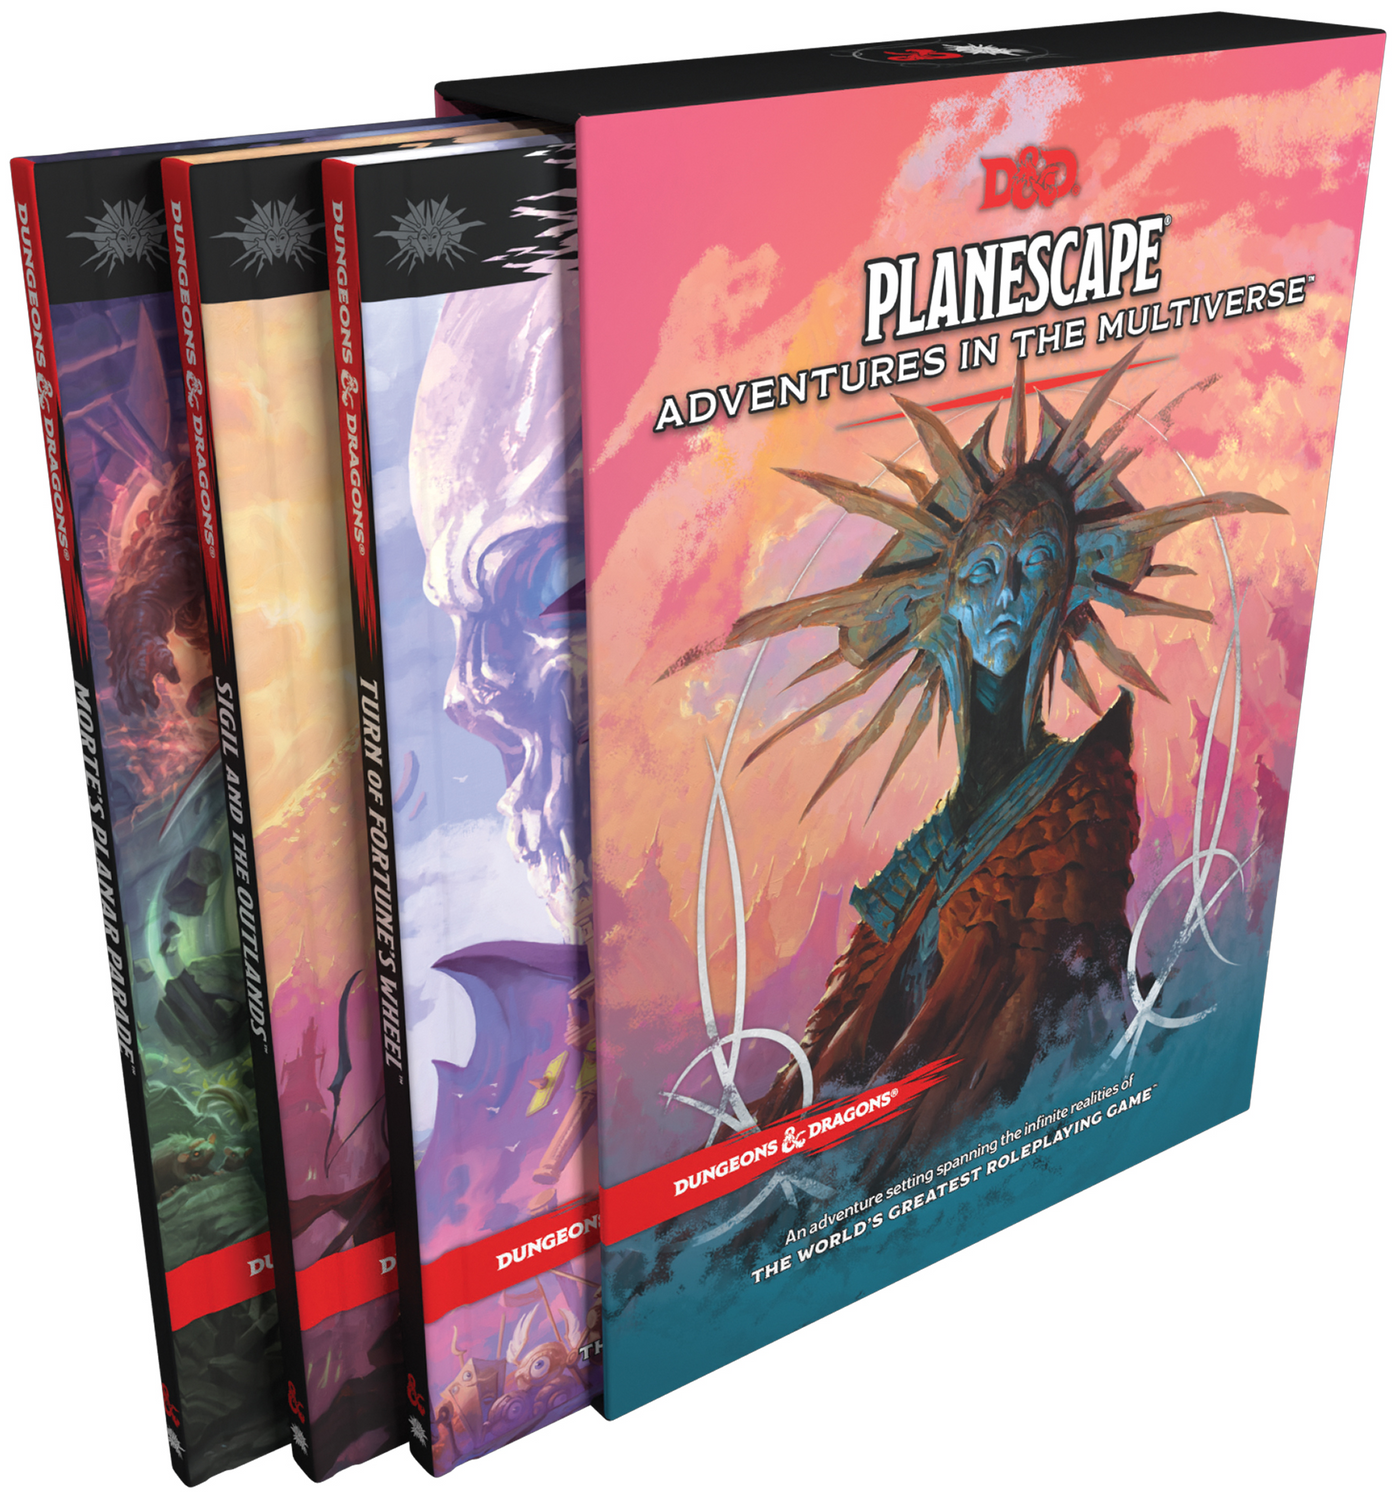 D&D: Planescape Adventures In The Multiverse HC